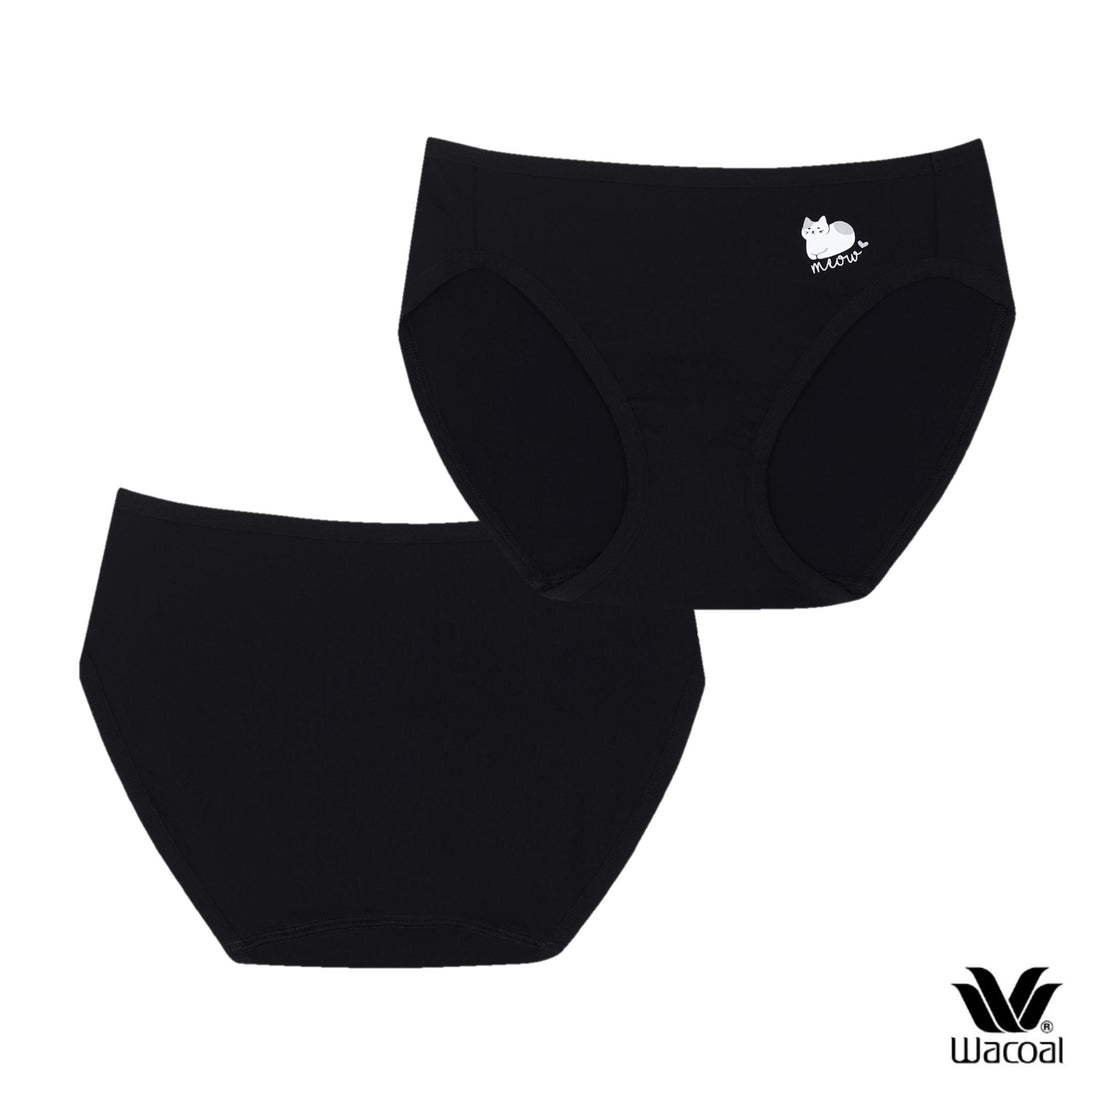 Wacoal Panty Fashion, bikini style underwear, 1 Set of 3 pieces, model WU2C04 (buy 1 set get 1 set free)